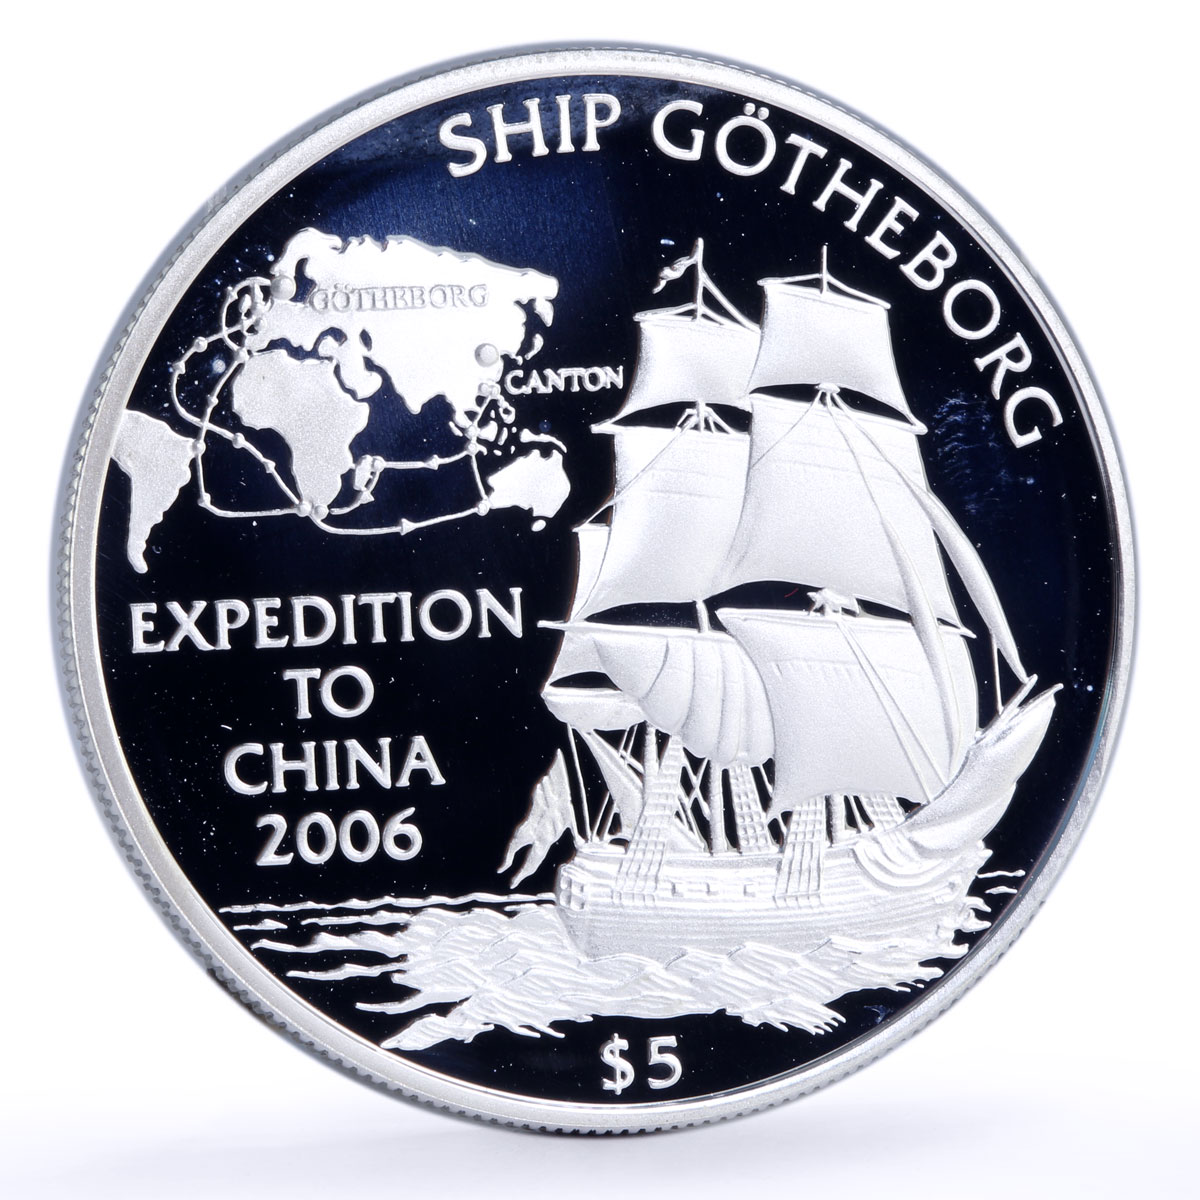 Pitcairn Islands 5 dollars Seafaring Gotheborg Ship Clipper silver coin 2006